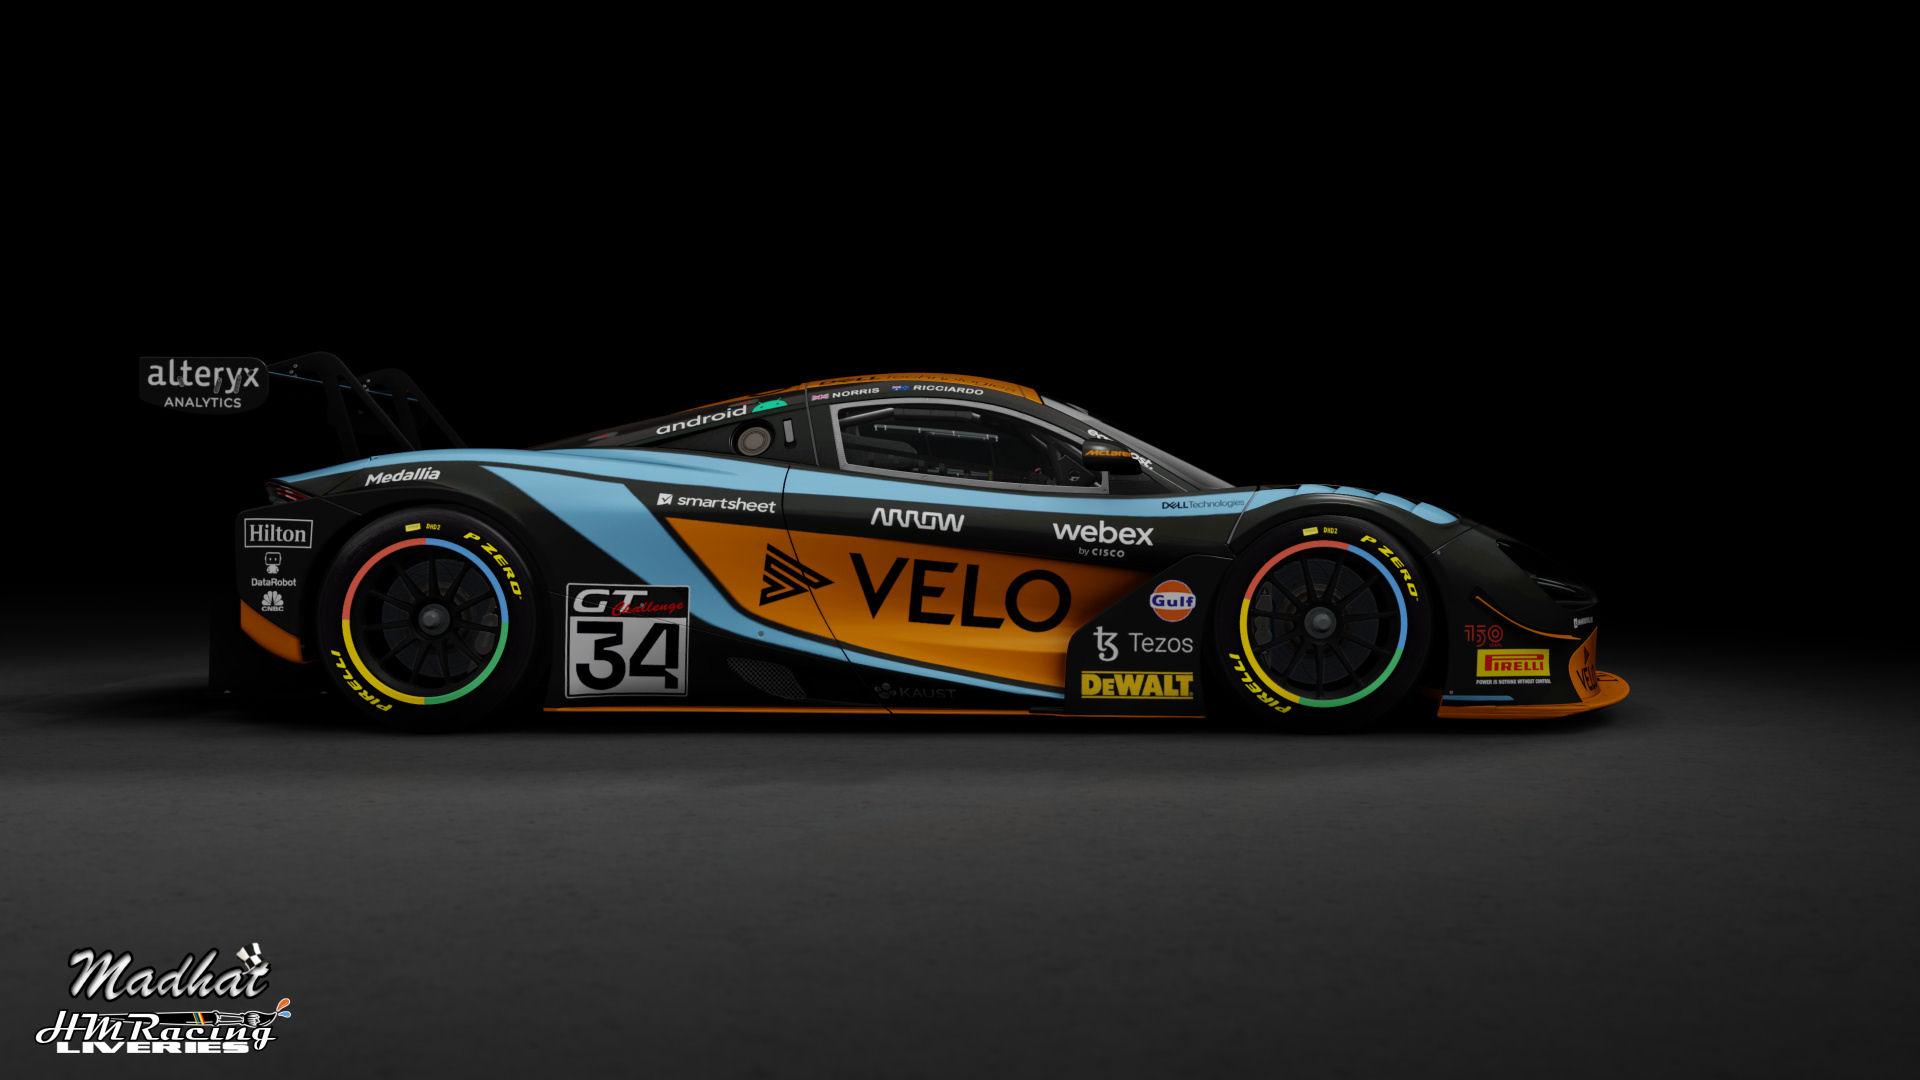 Velo McLaren 720s GT3 Madhat HMRacing Liveries 05b.jpg